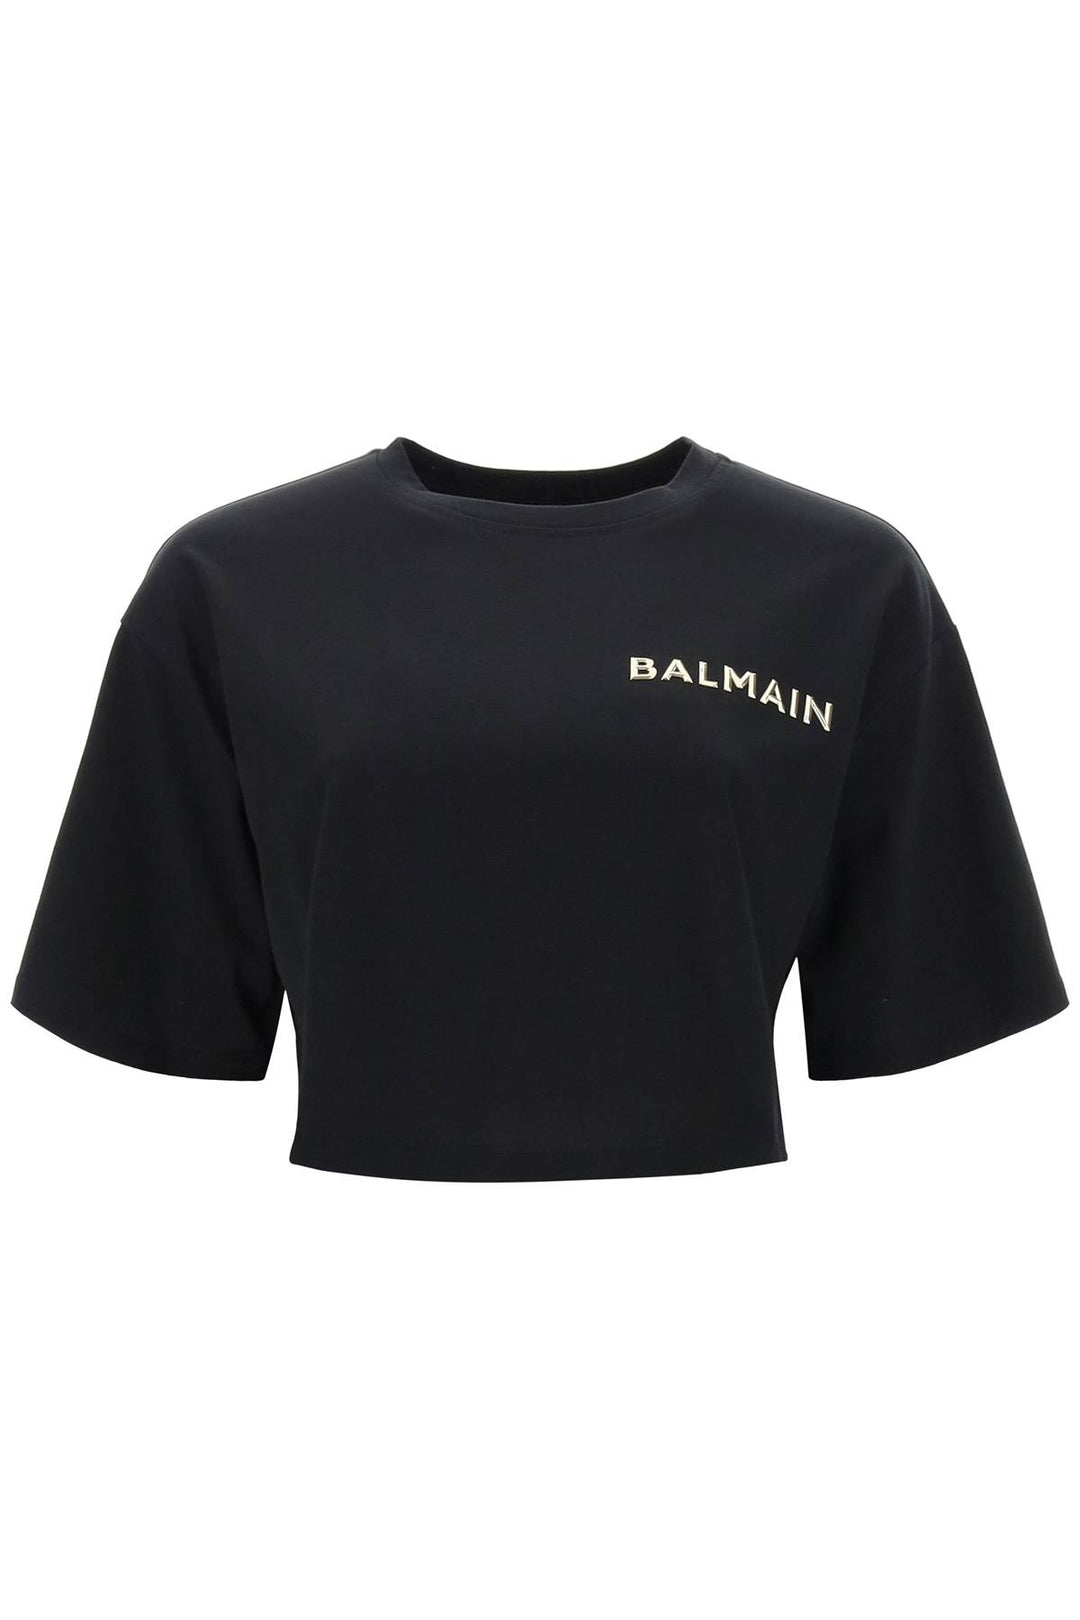 Balmain Cropped T Shirt With Metallic Logo   Nero